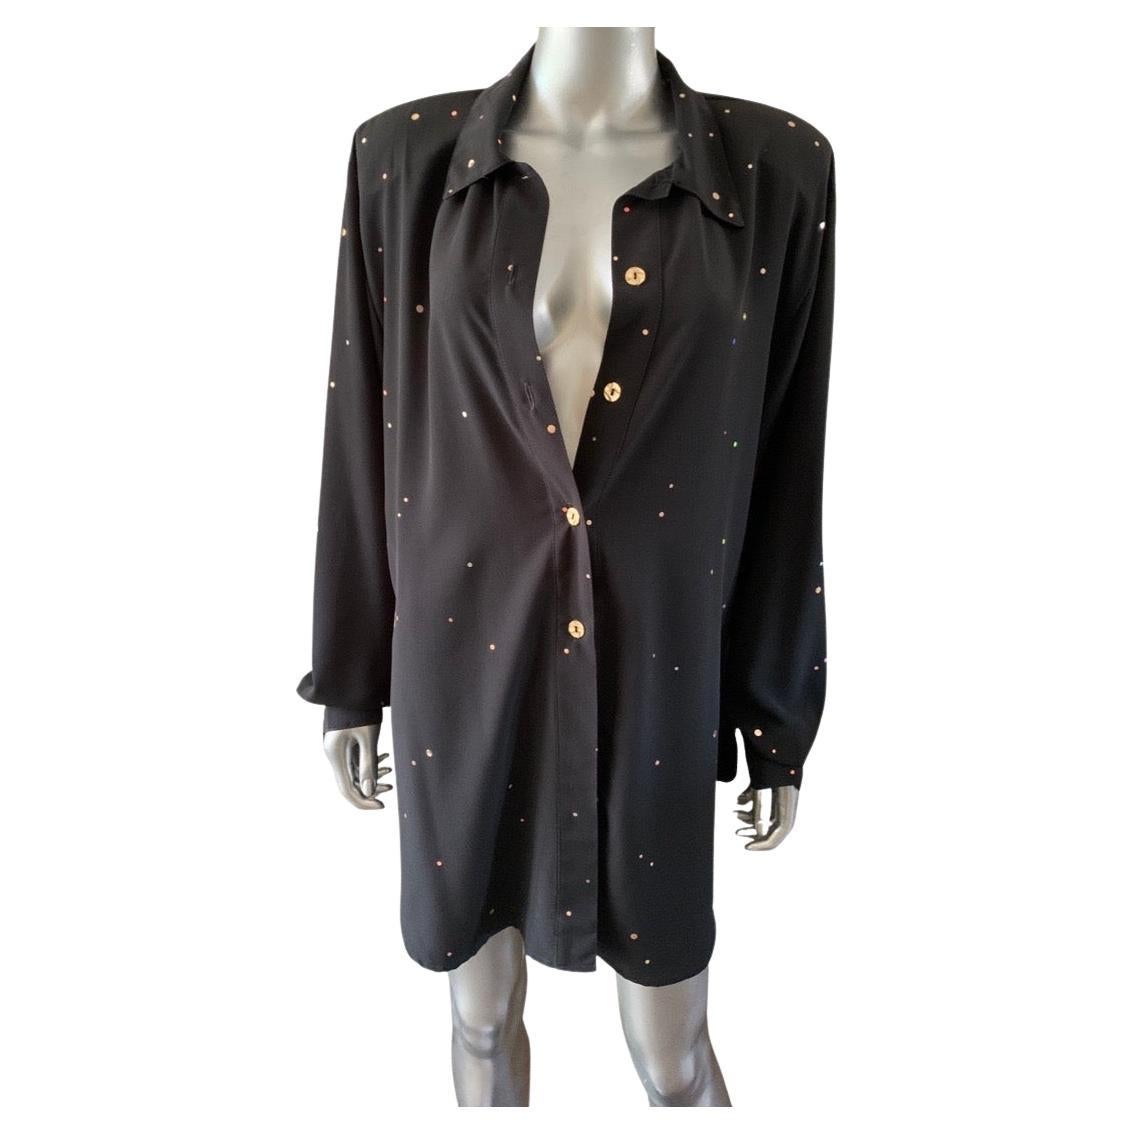 Vintage Black Shirt Dress with Sequin Embellishments NWT Size L 